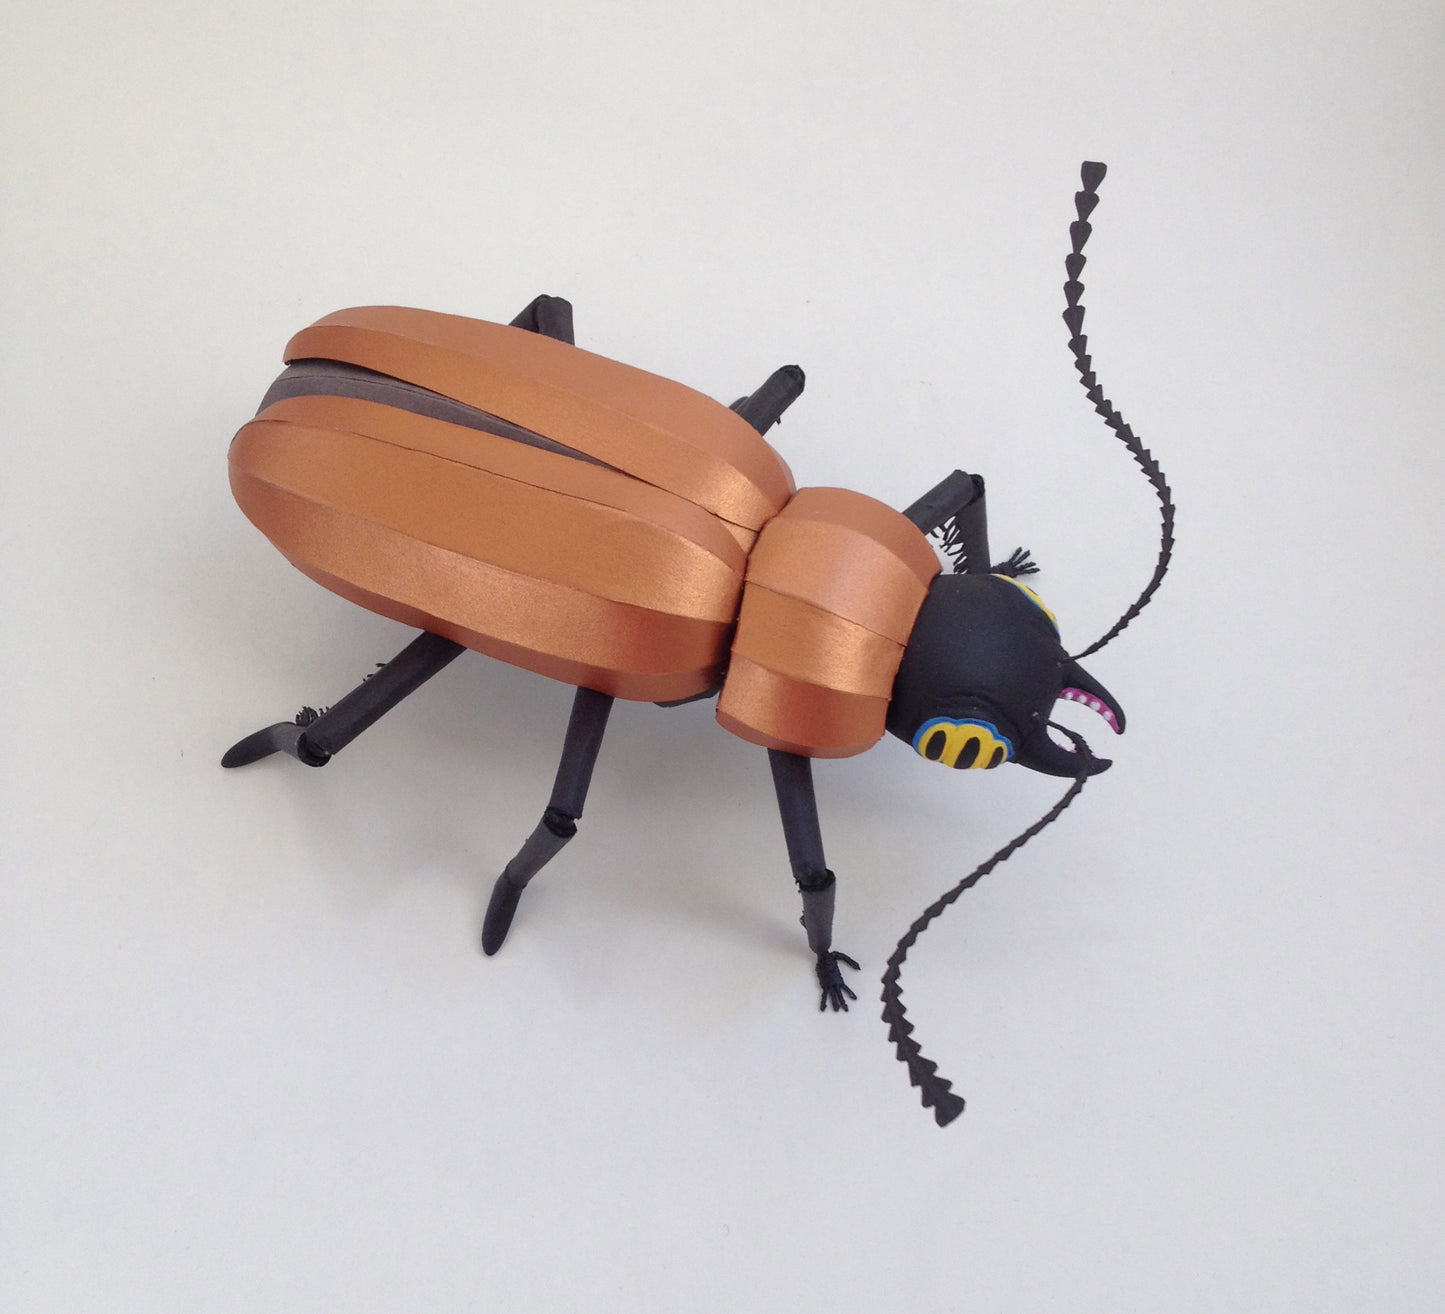 Cat Johnston - Copper beetle